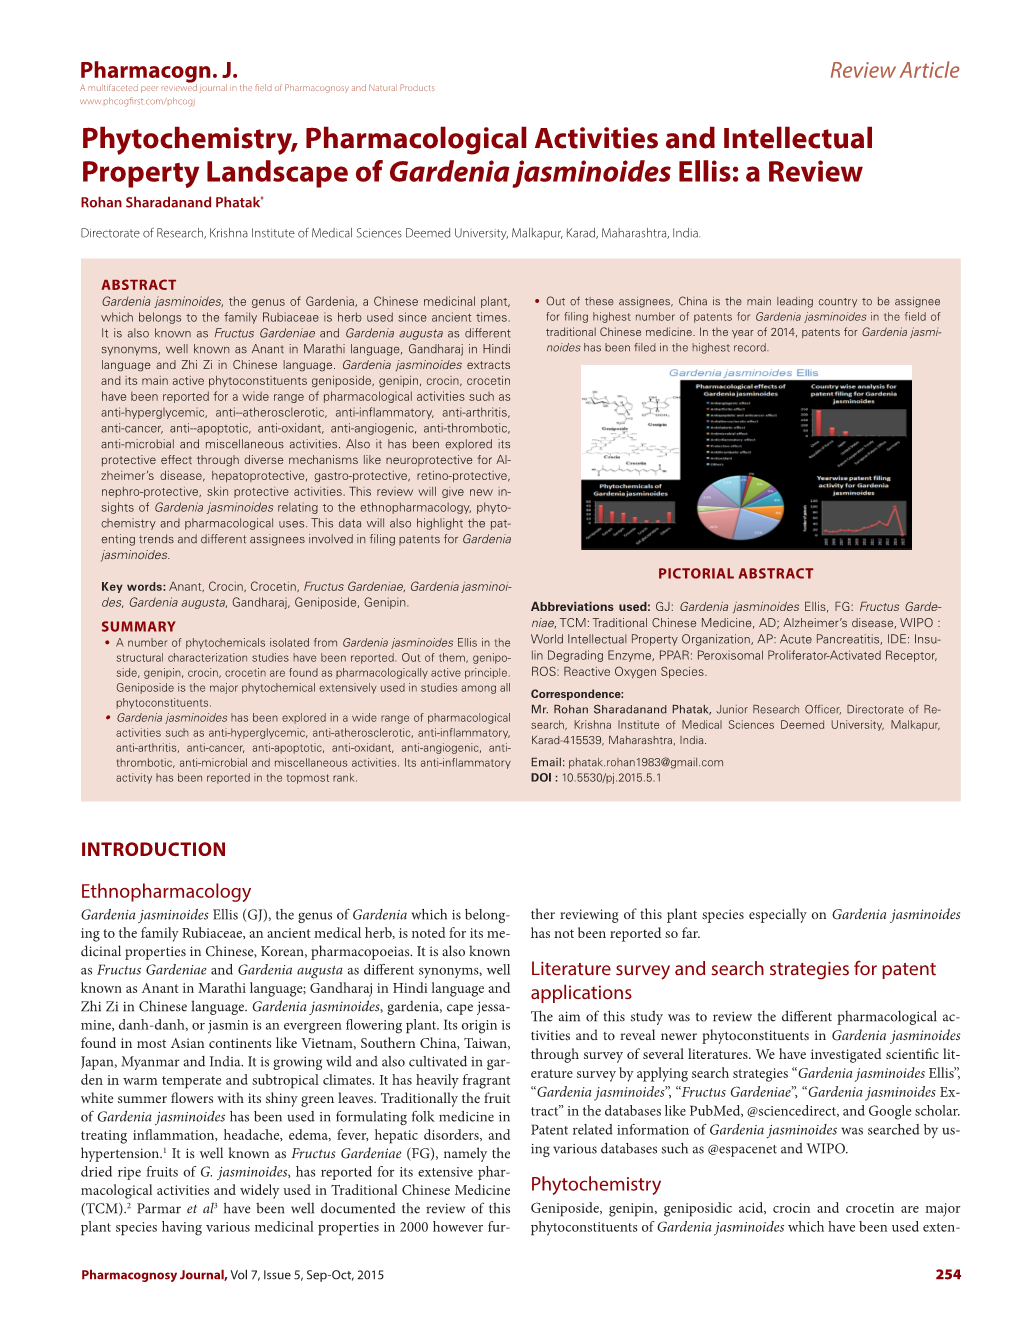 Pharmacognosy Journal, Vol 7, Issue 5, Sep-Oct, 2015 254 ROHAN SHARADANAND PHATAK: Phytochemistry, Pharmacology and IP of Gardenia Jasminoides Ellis